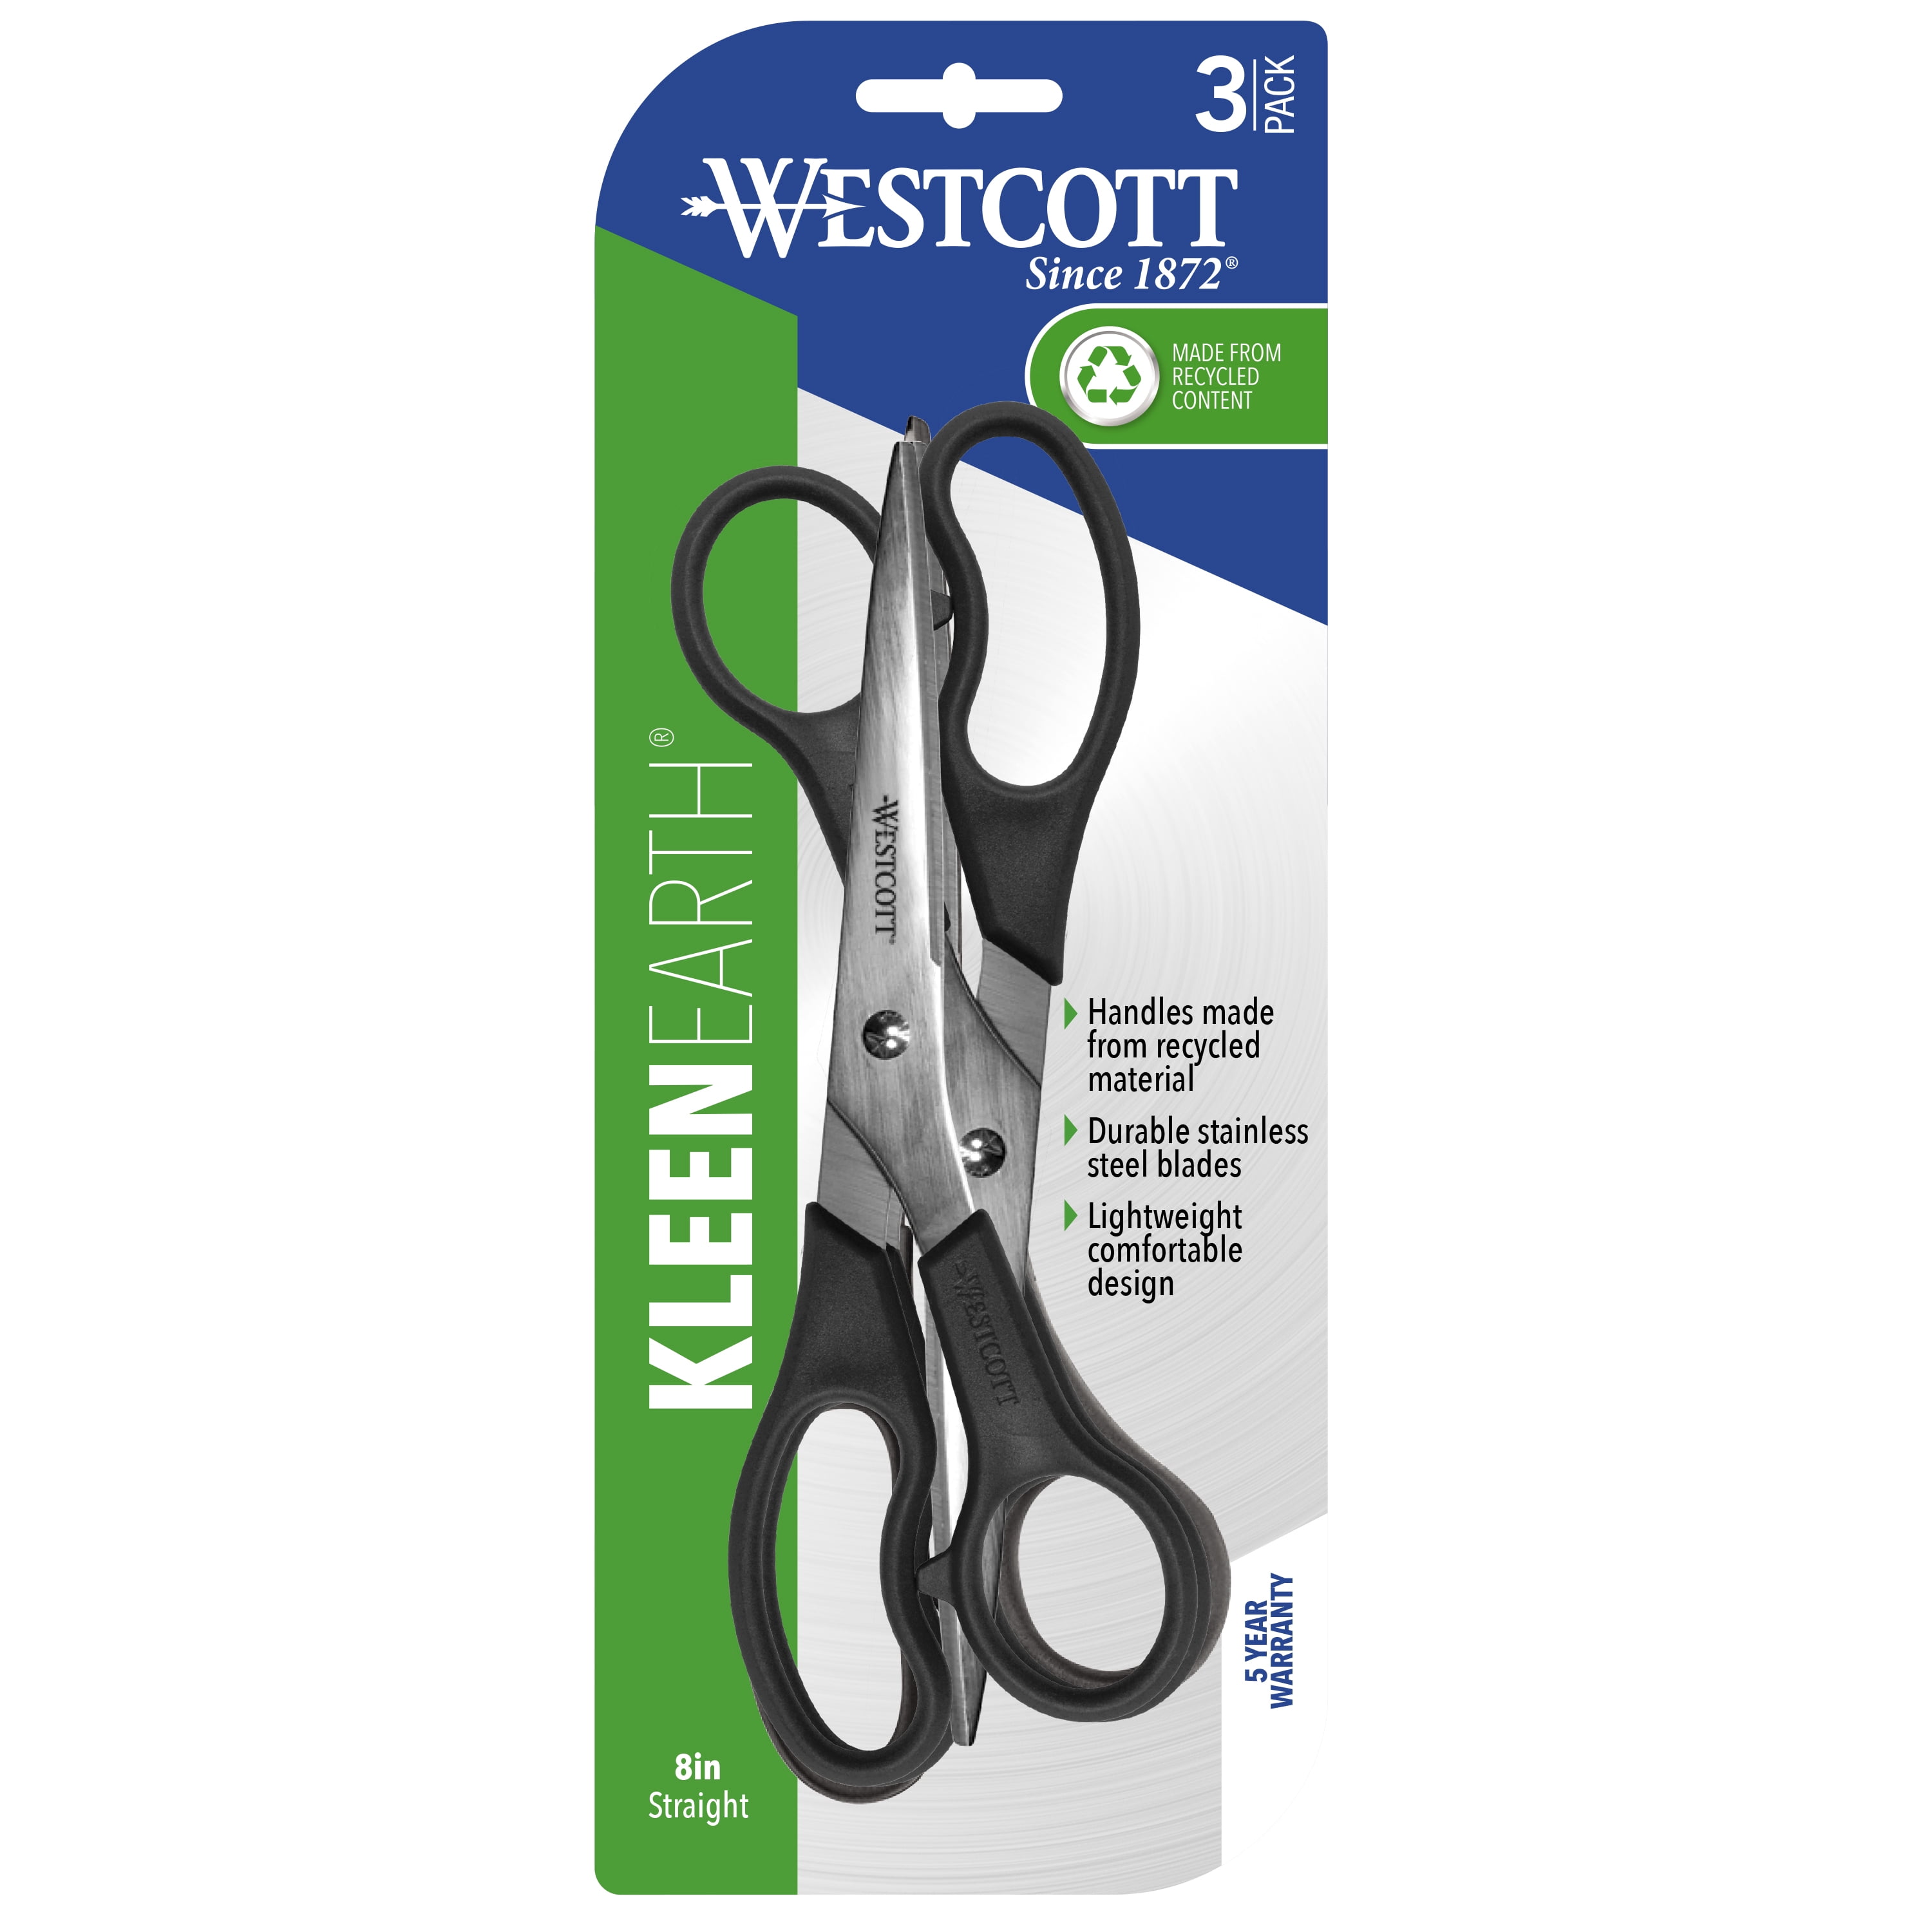 Westcott - Westcott KleenEarth 8 Straight Recycled Stainless Steel  Scissors, Black, 2 Pack (15179)